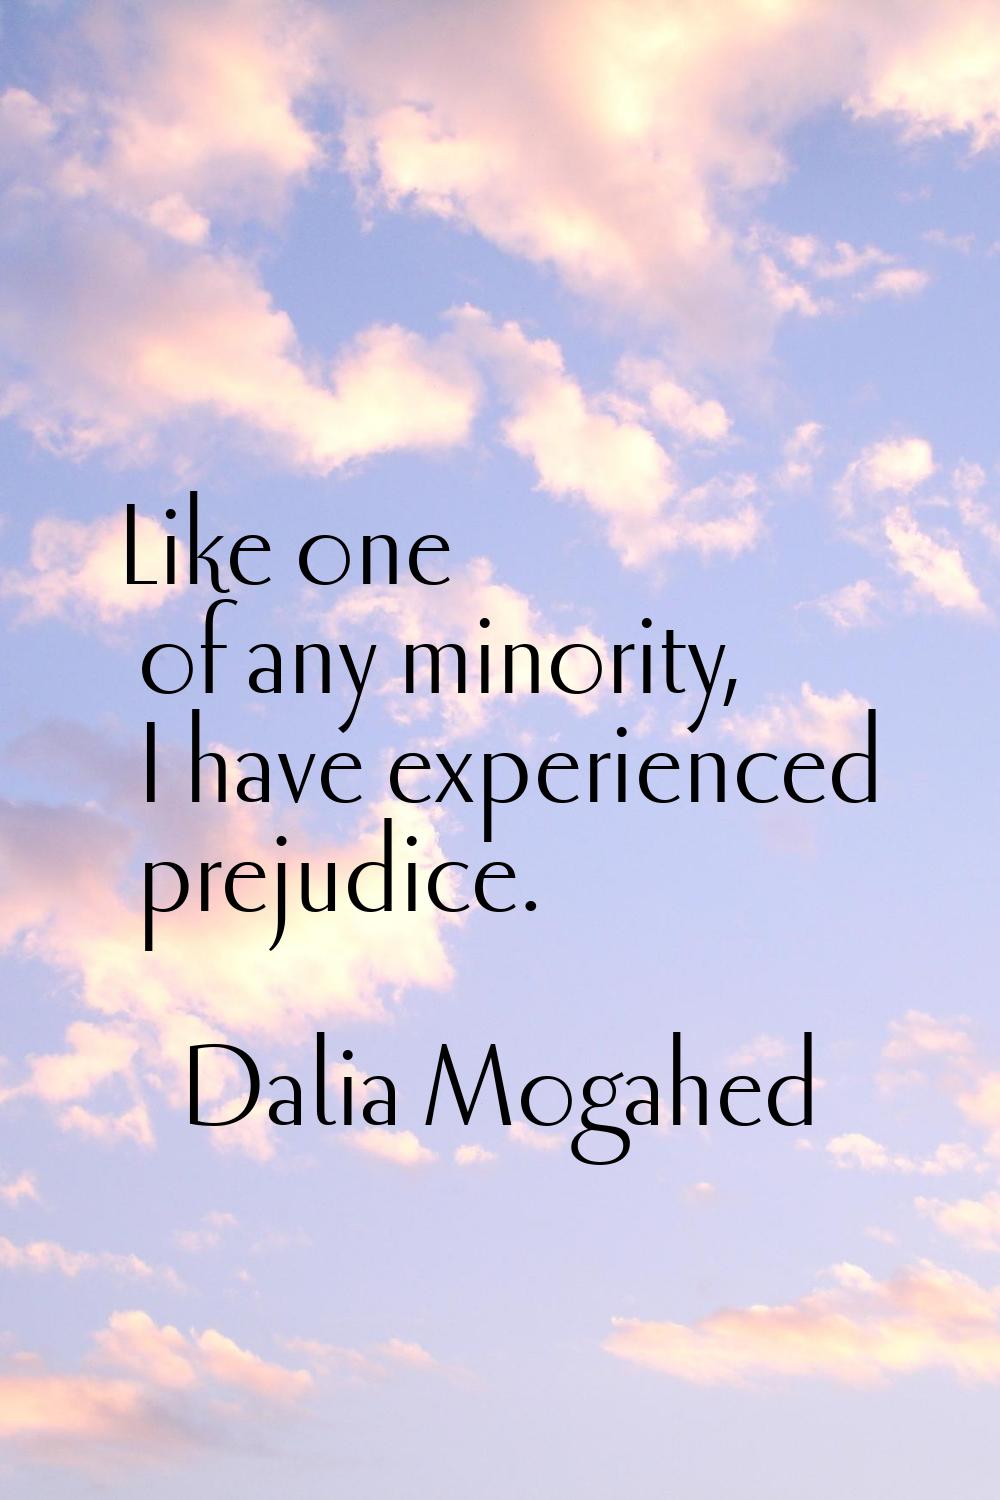 Like one of any minority, I have experienced prejudice.